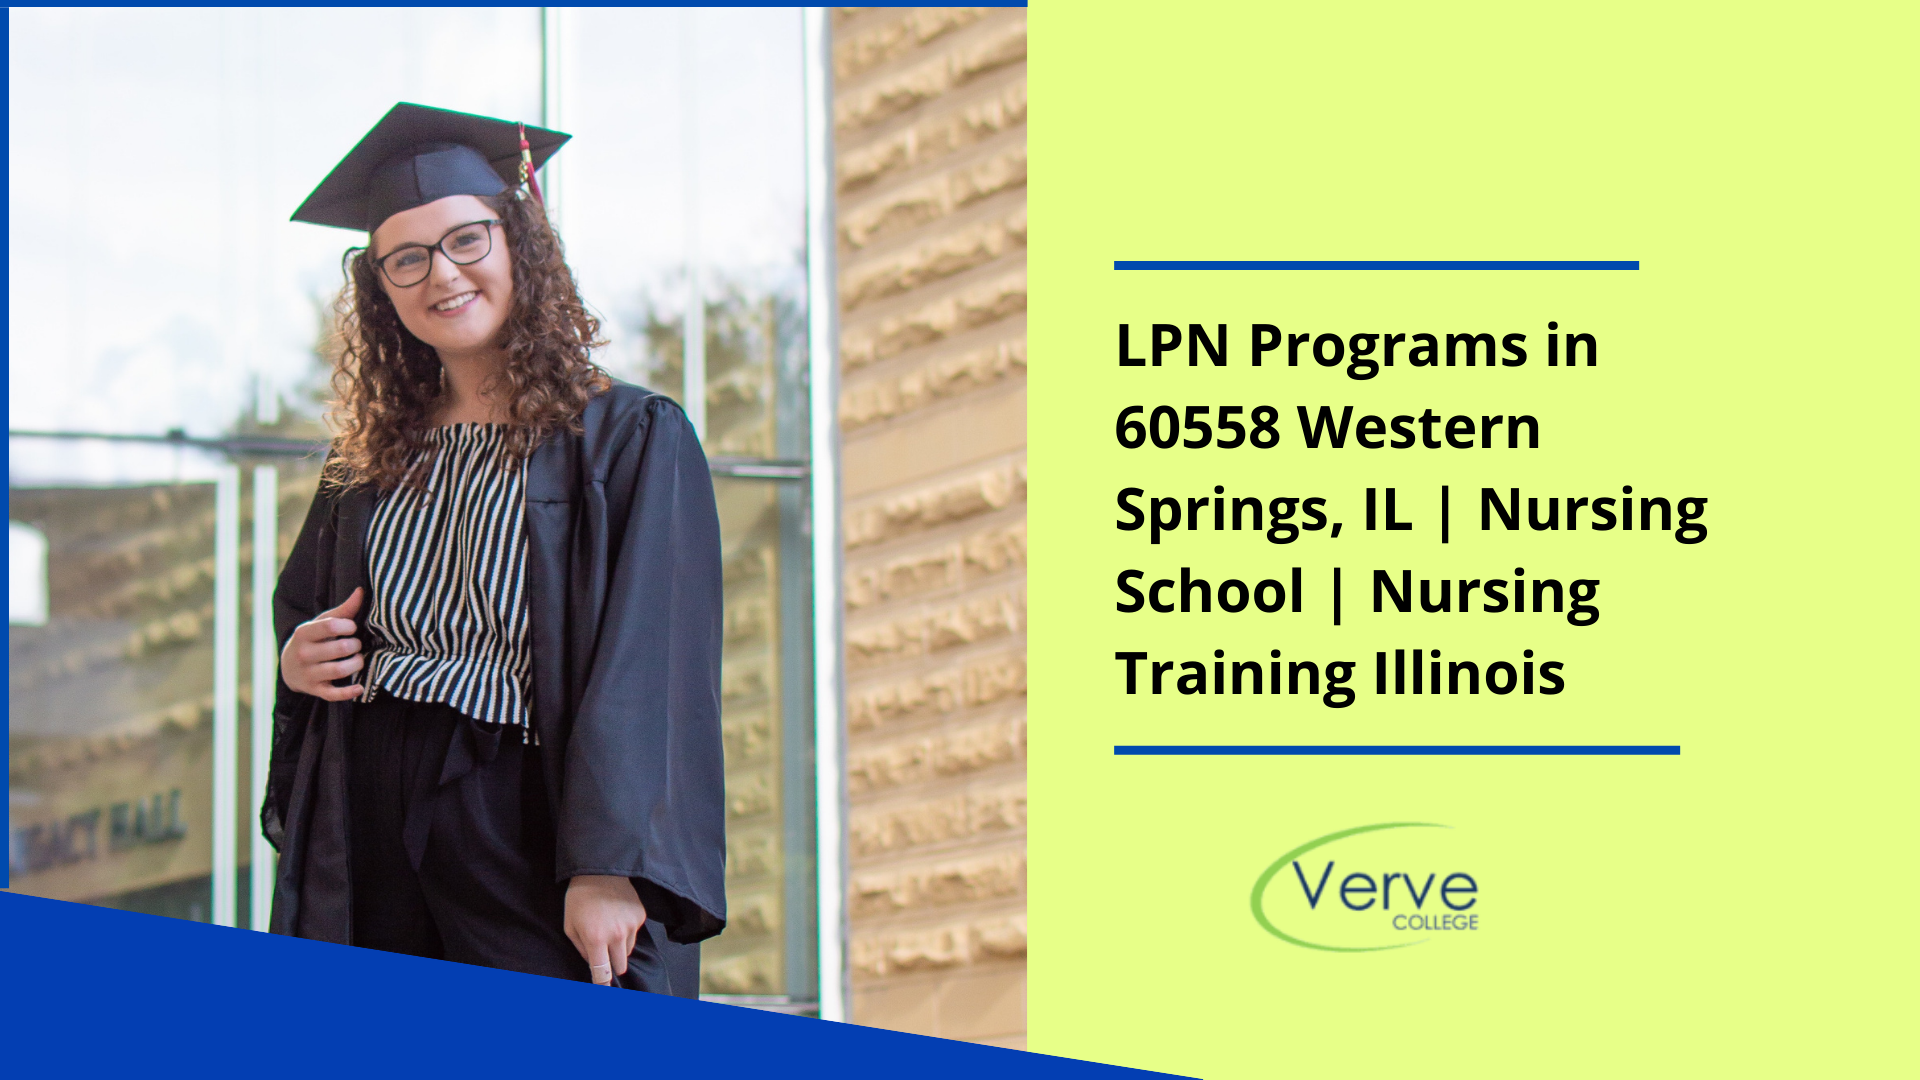 LPN Programs in 60558 Western Springs, IL | Nursing School | Nursing Training Illinois